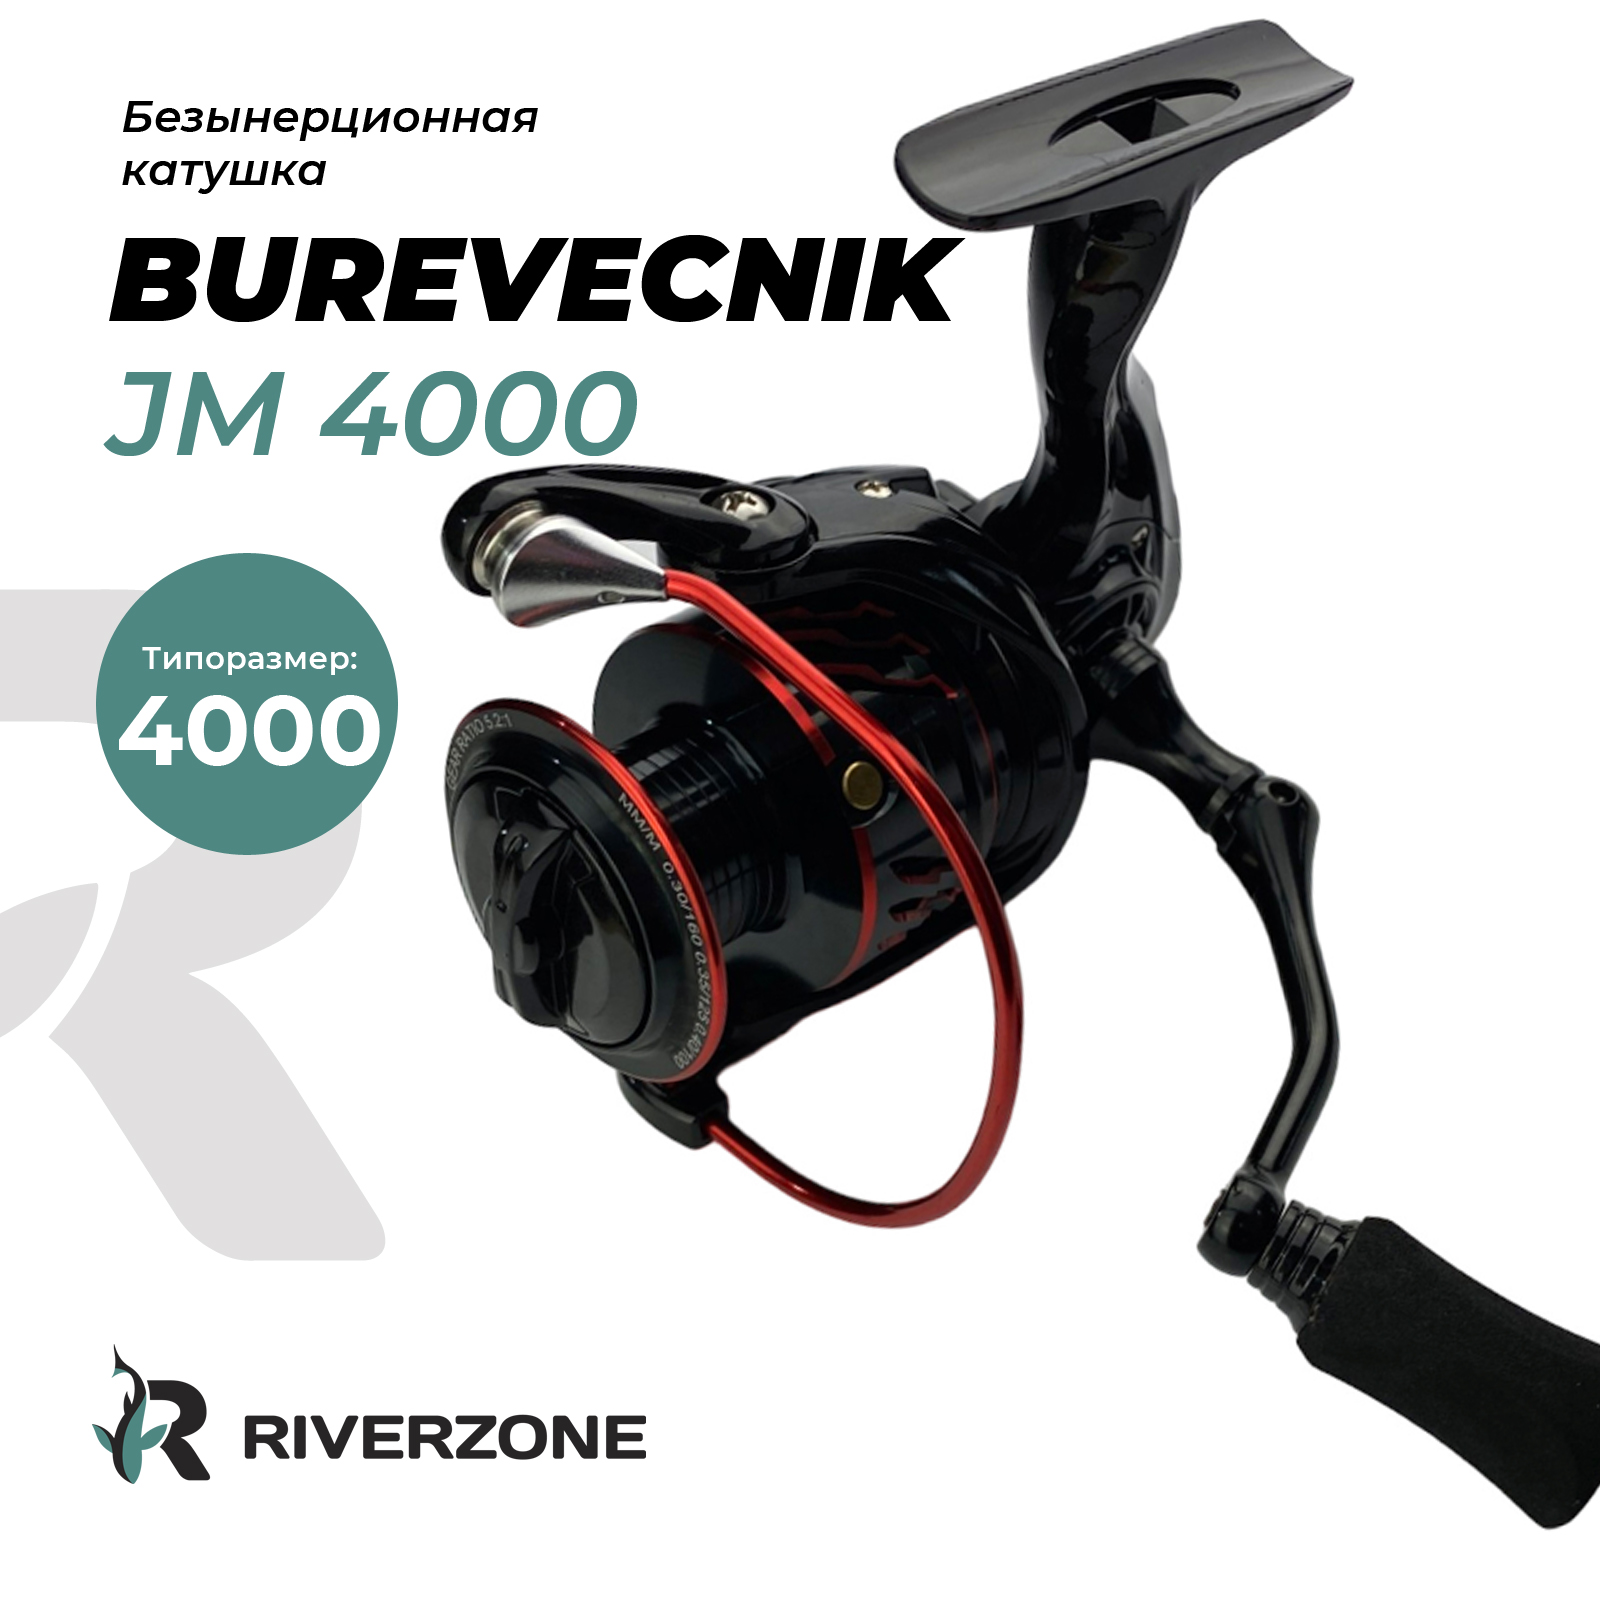 Катушка Riverzone Burevecnik JM4000 - фото 1